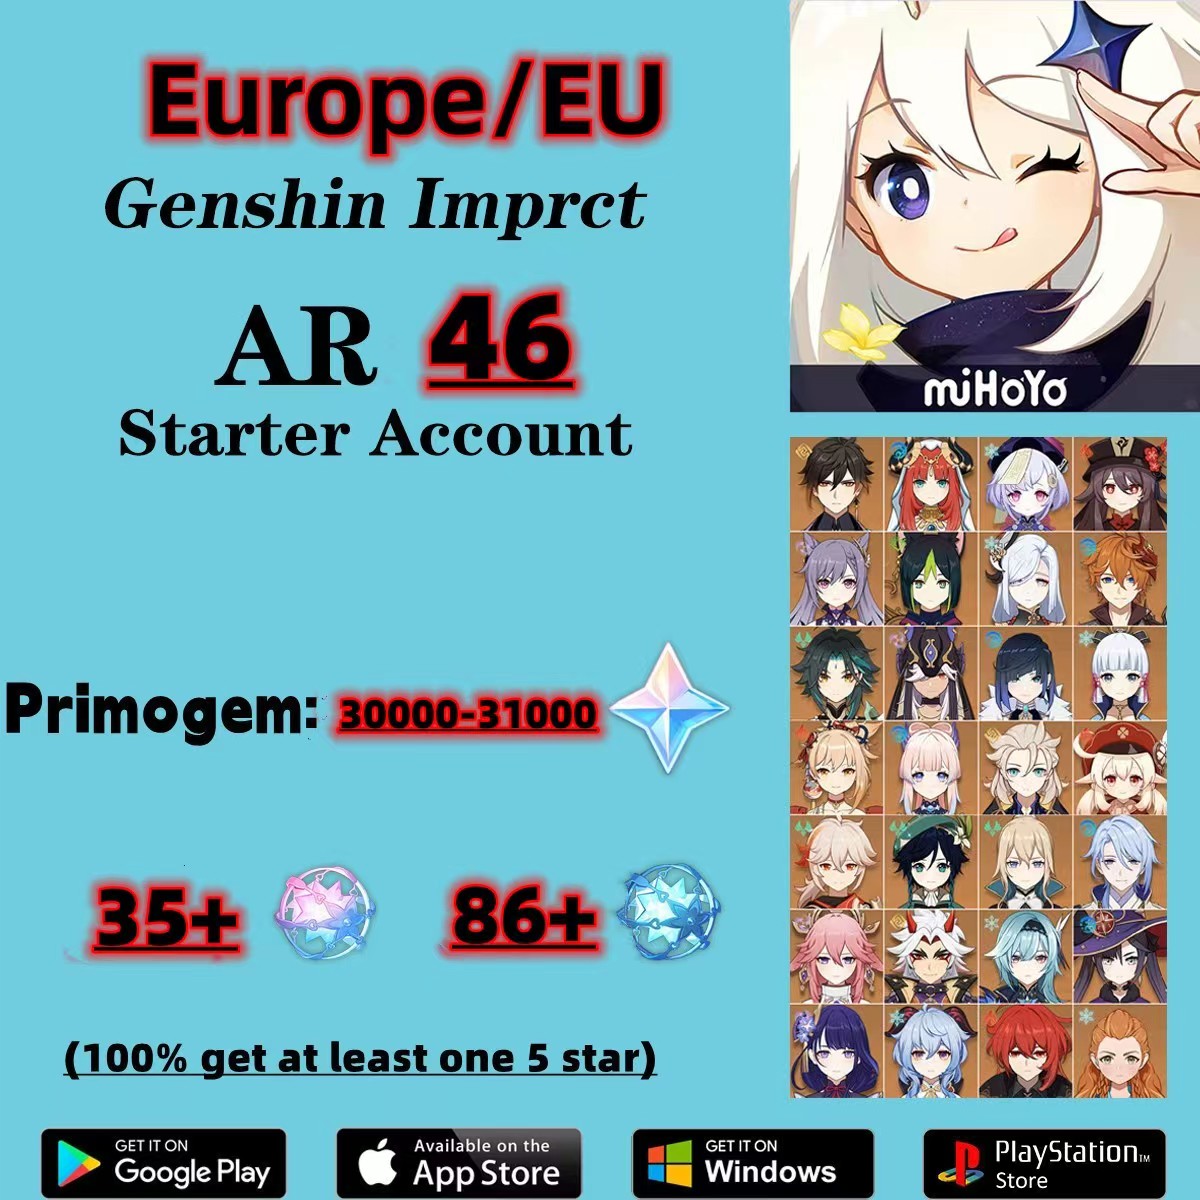 EU|AR46|Guarantee300+Wishes|Genshin Impact account|Primogem30000+|Interwined Fate 35|Acquaint Fate 86/#F74